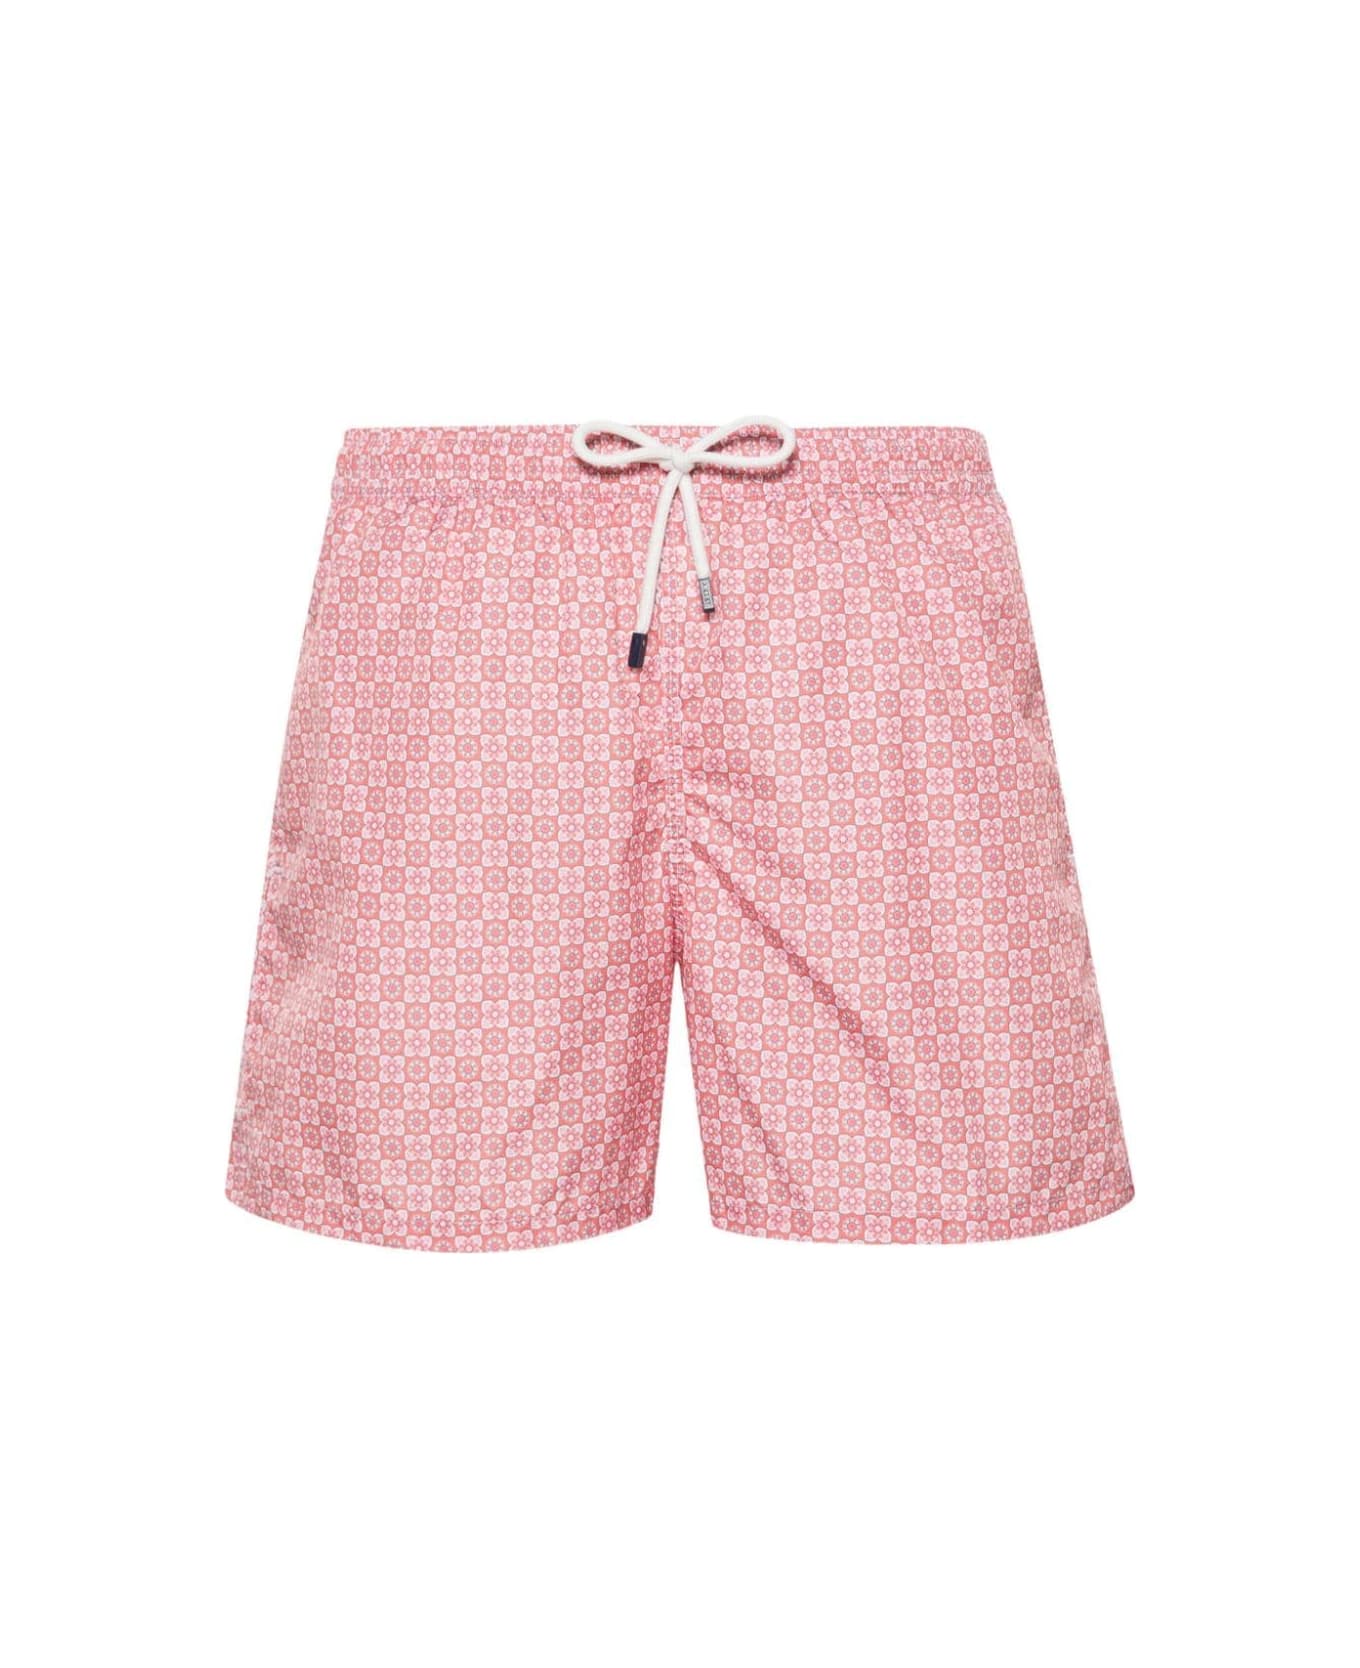 Fedeli Red Swim Shorts With Flower Pattern - Red スイムトランクス